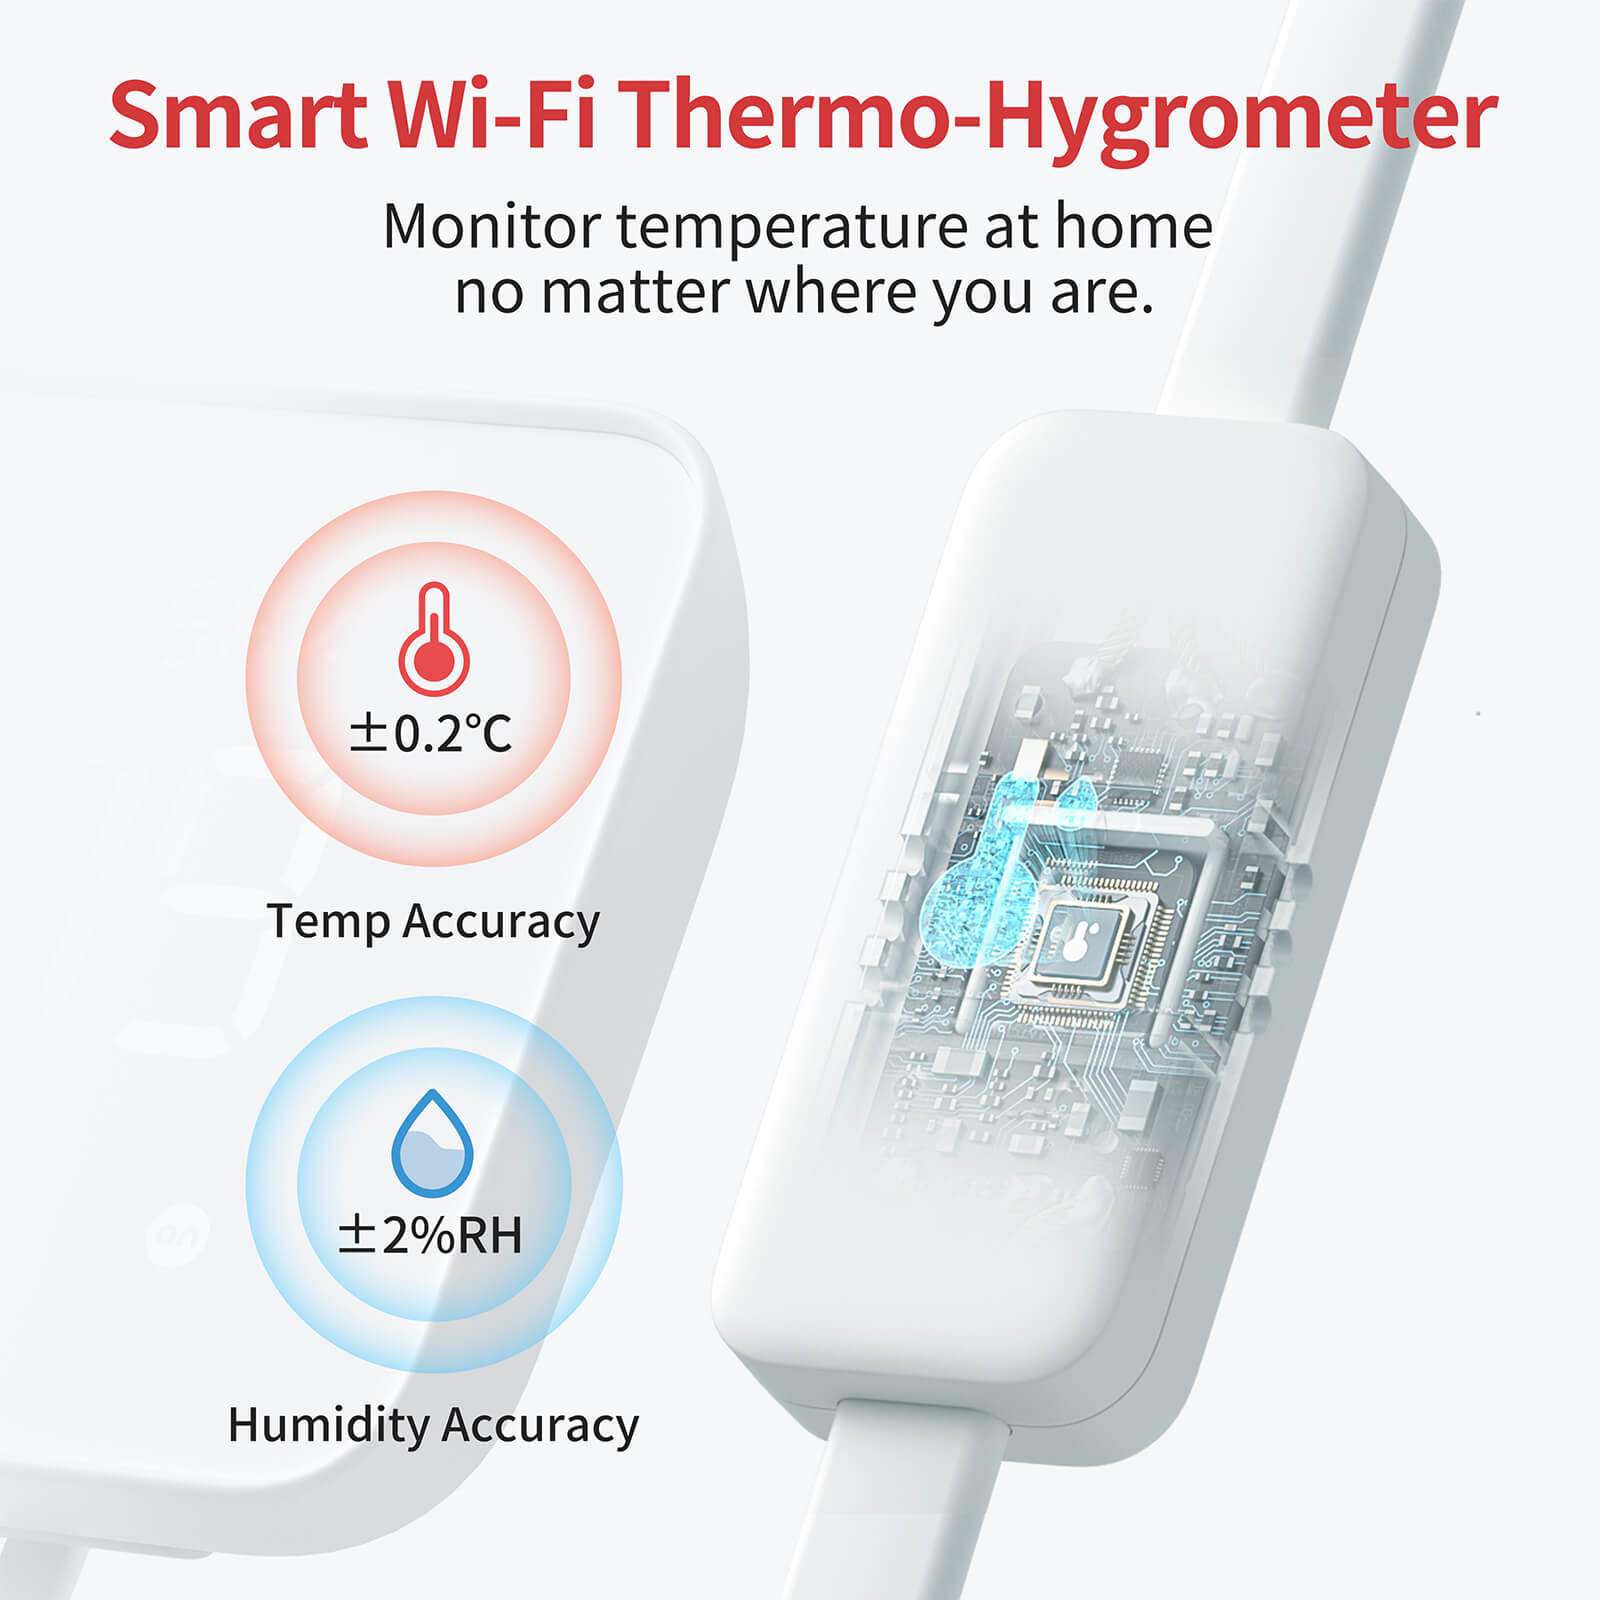 SwitchBot Hub 2 | Smart Wi-Fi Hygrometer & Infrared Remote Hub 